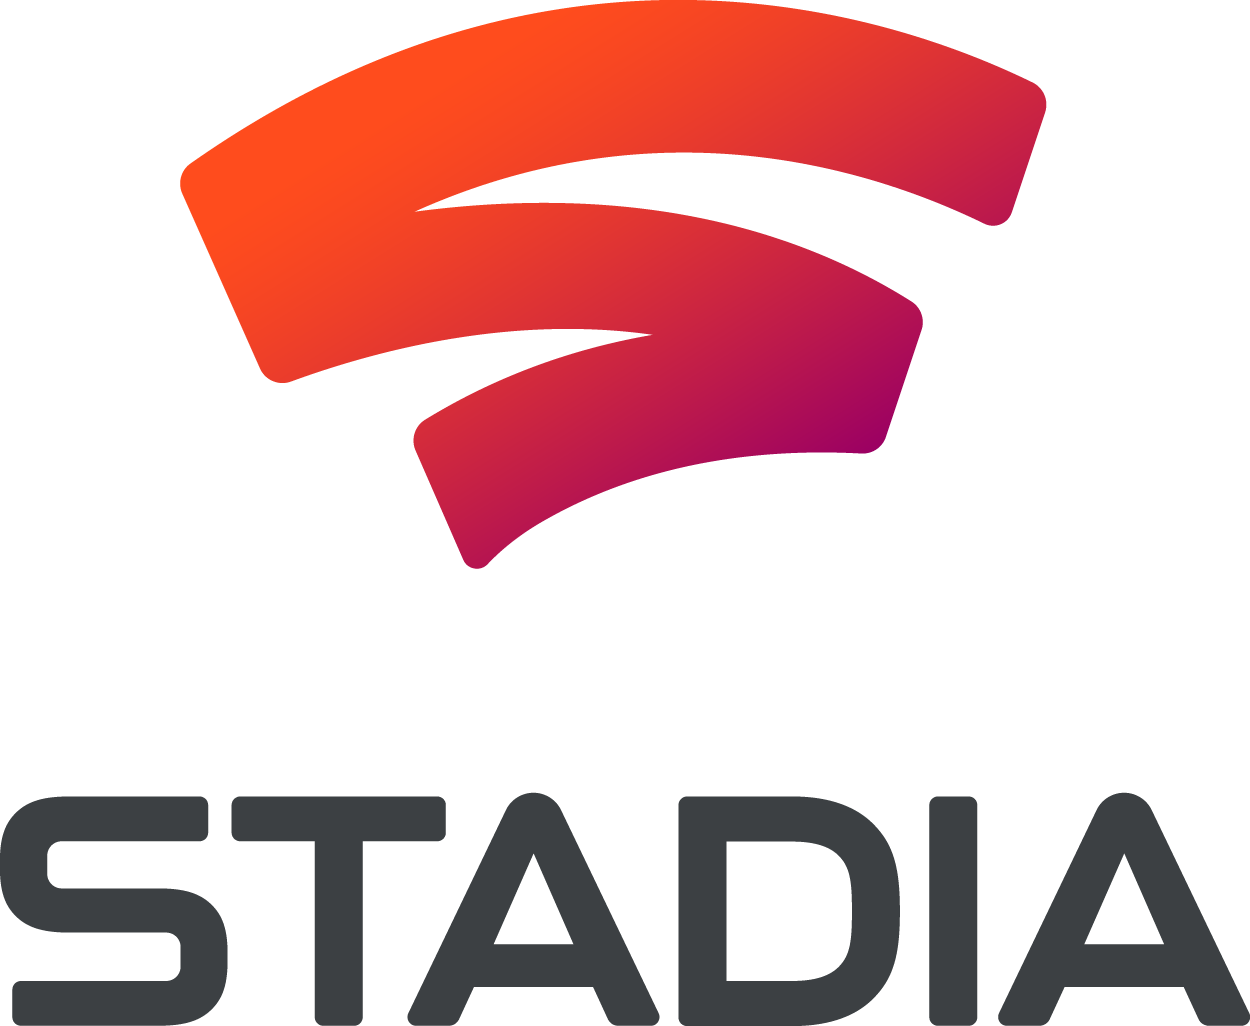 Google Stadia logo